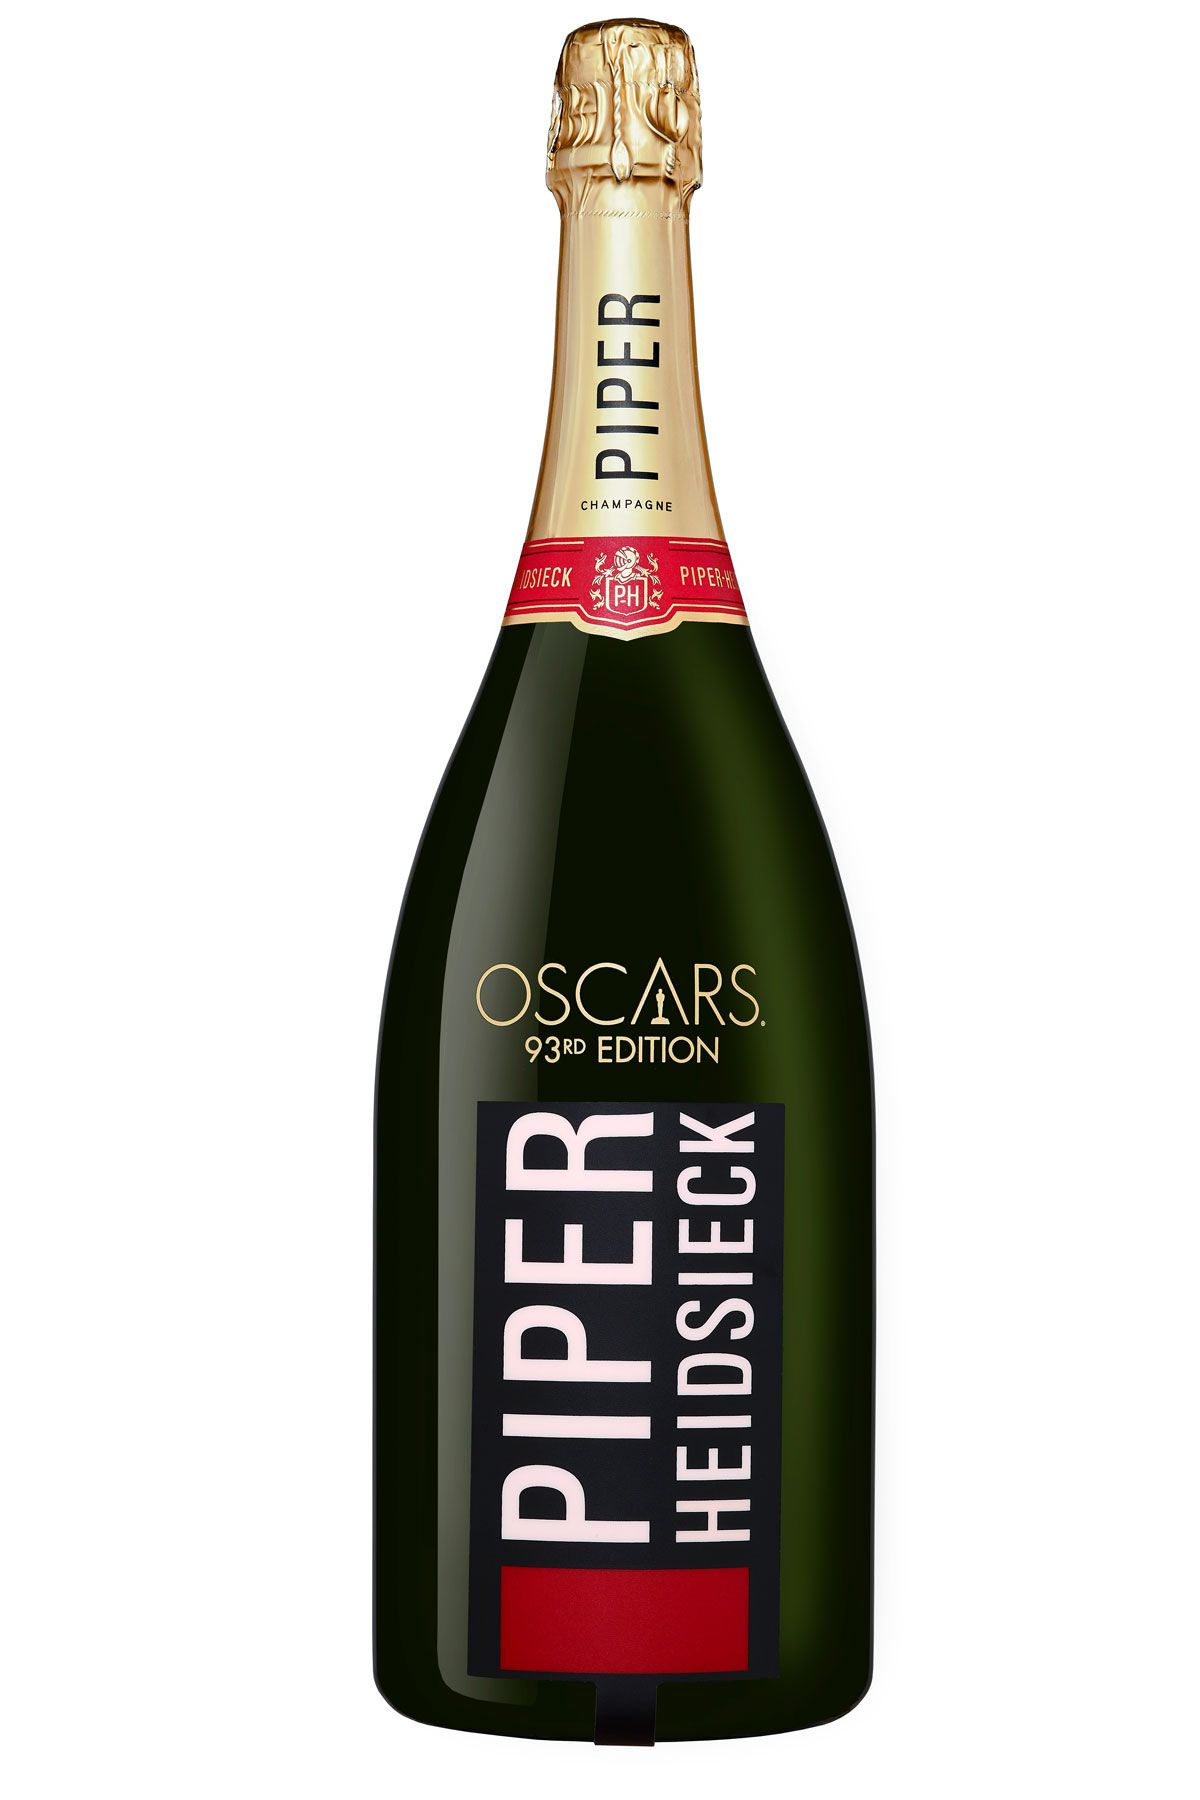 Piper-Heidsieck Oscars bottle